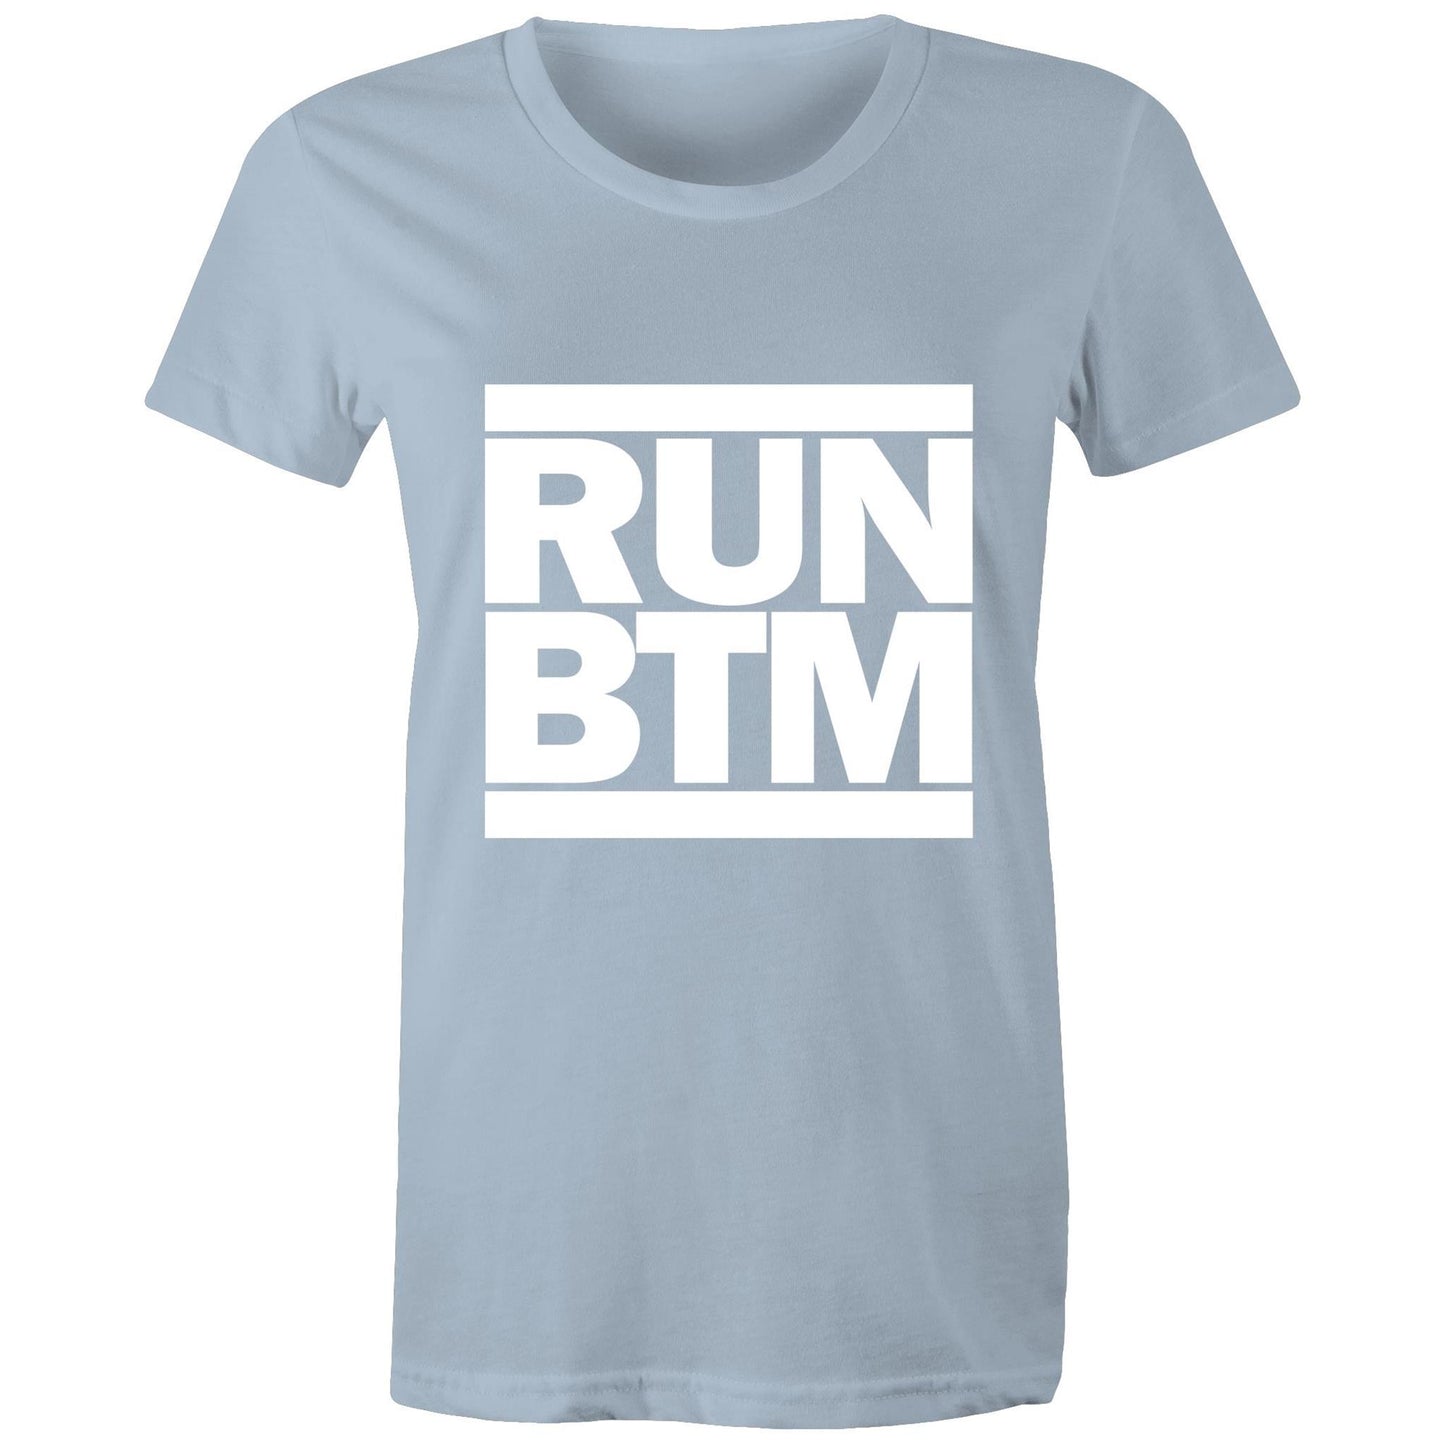 RUN BTM (All white) - Sportage Surf - Womens T-shirt